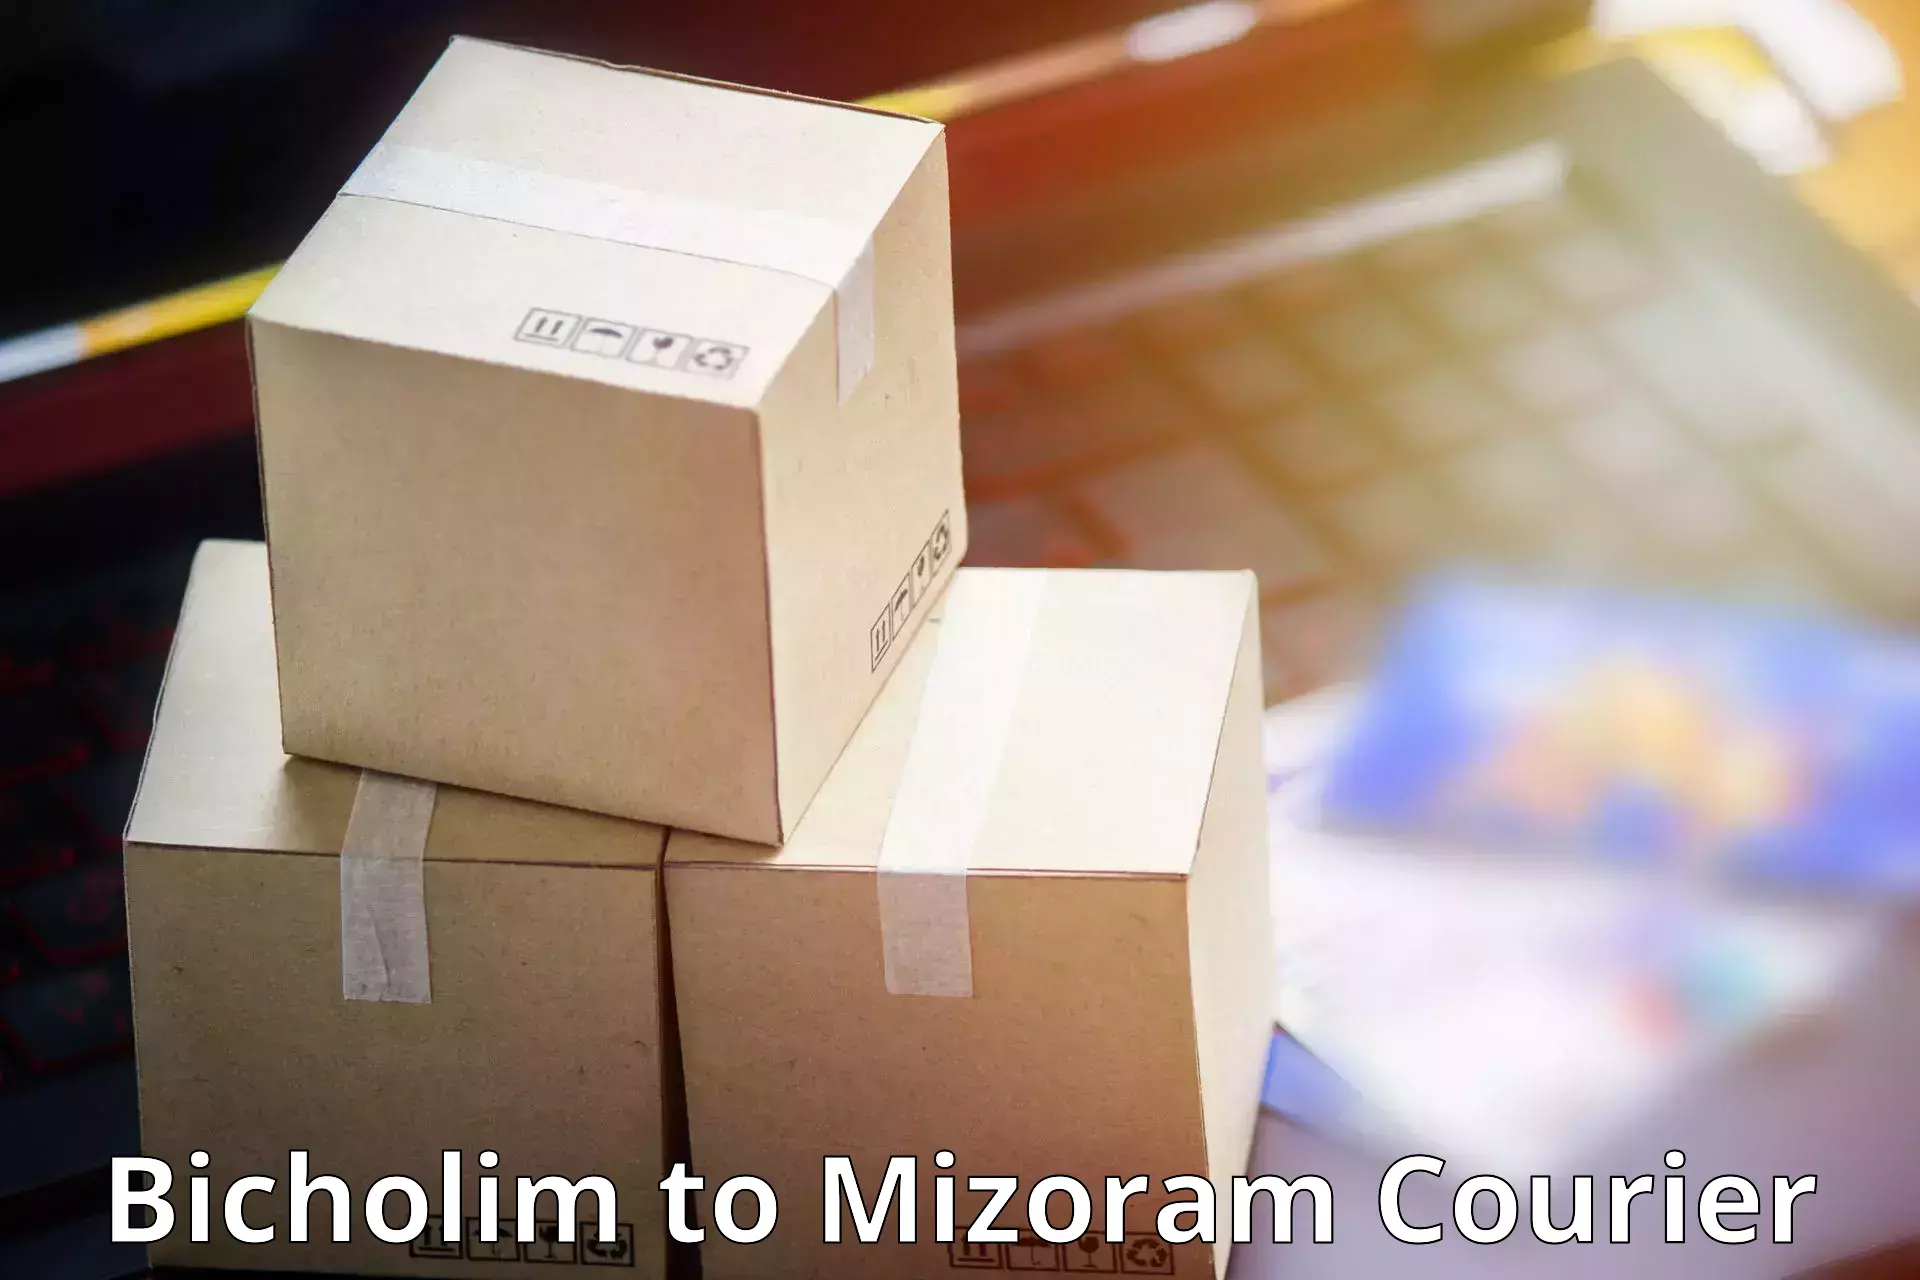 Nationwide delivery network Bicholim to Mizoram